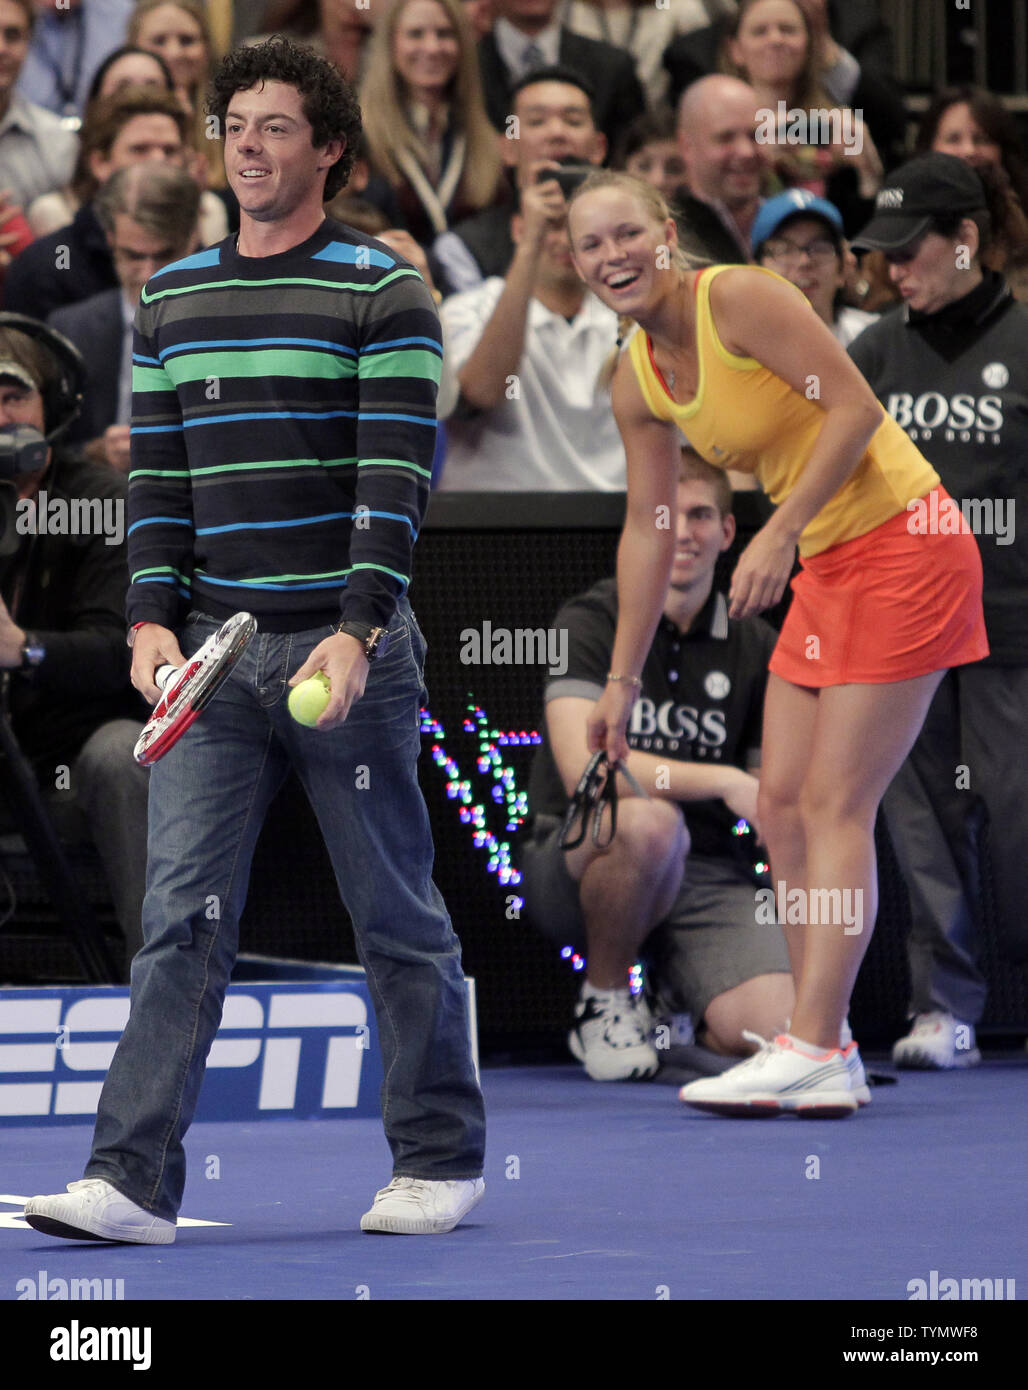 Caroline Wozniacki watches boyfriend and PGA Professional Rory McIlroy walk  on the tennis court in her match against Maria Sharapova at the BNP Paribas  Showdown at Madison Square Garden in New York